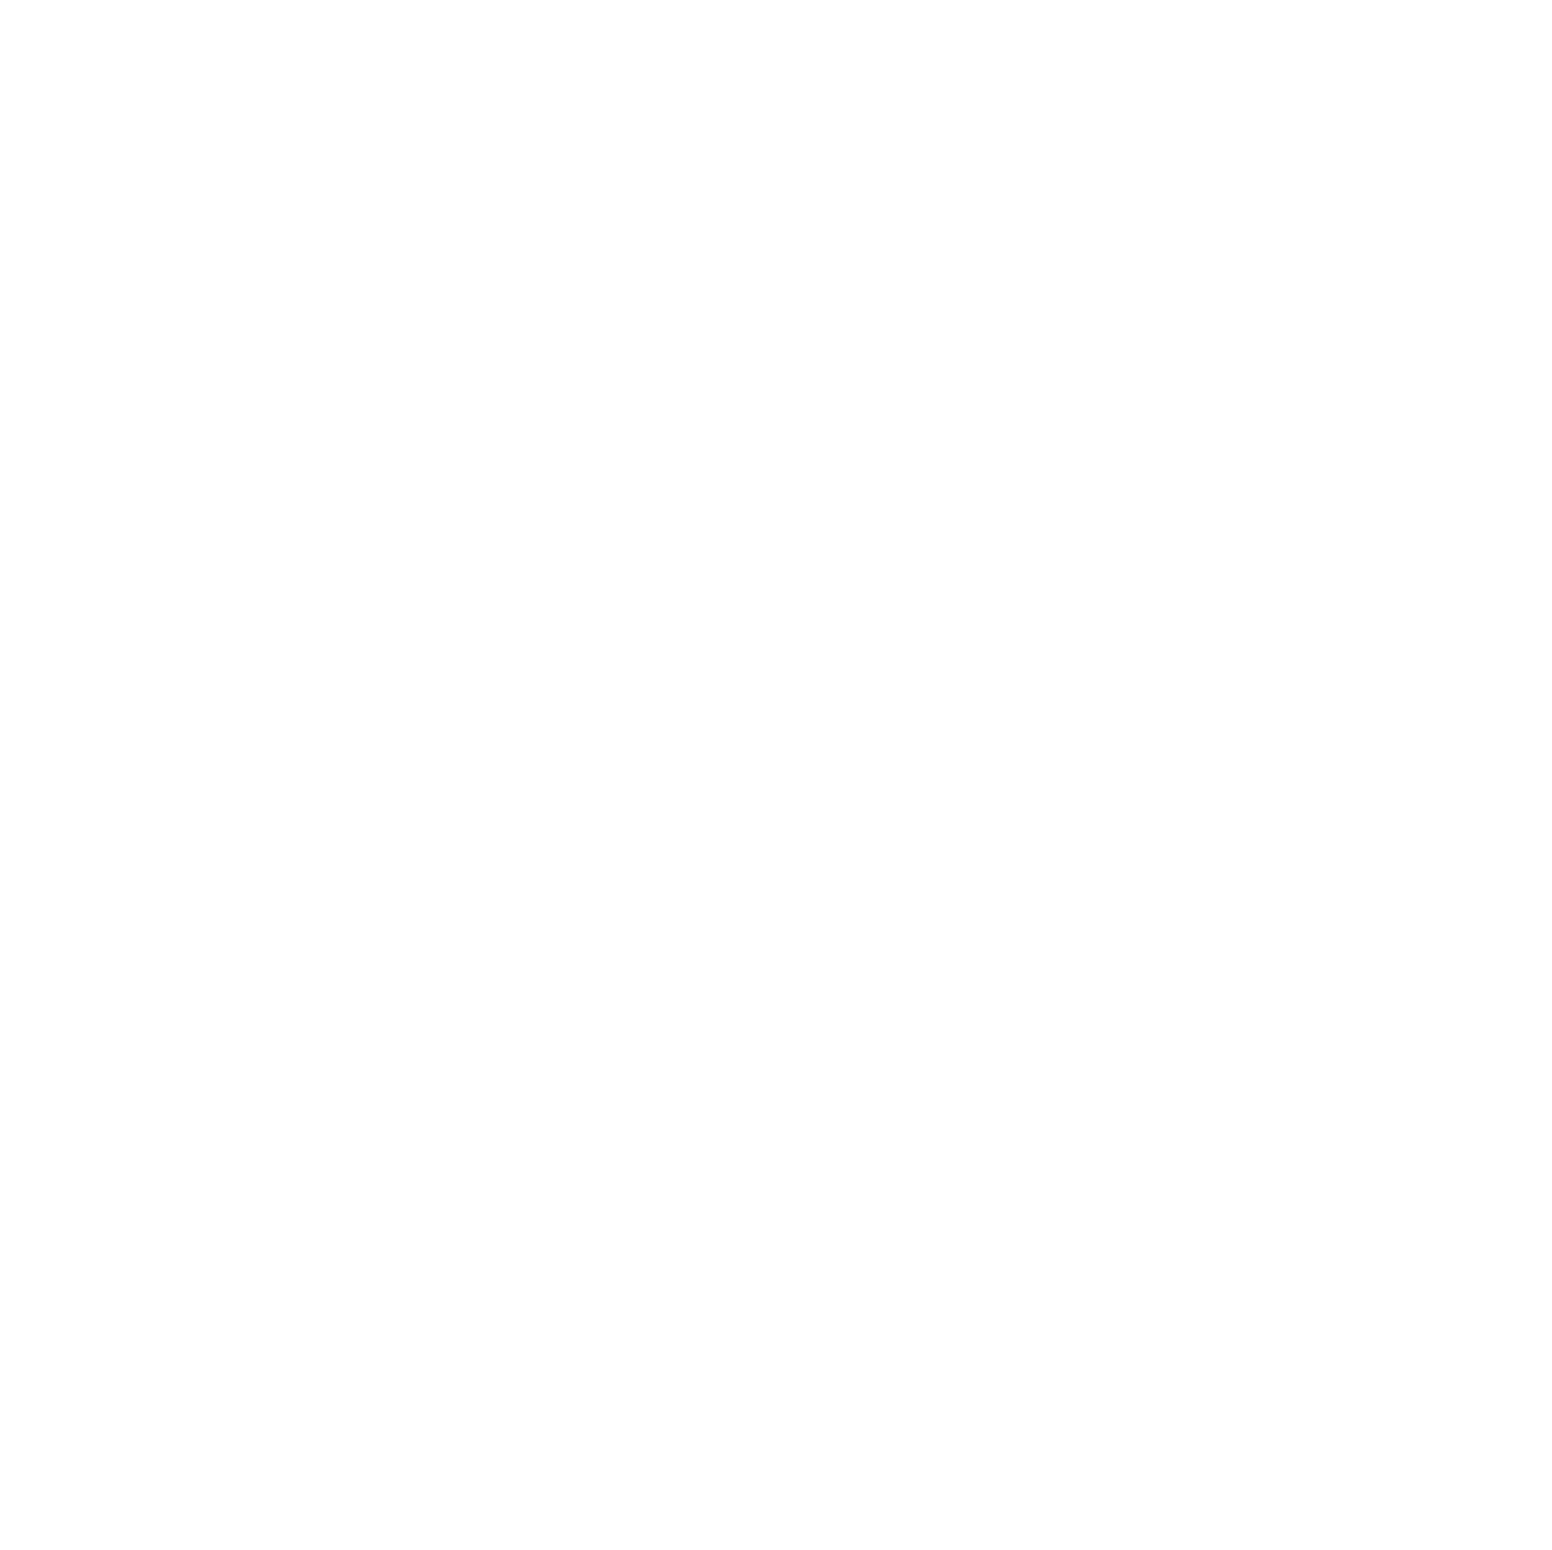 Mural Oncology logo pour fonds sombres (PNG transparent)